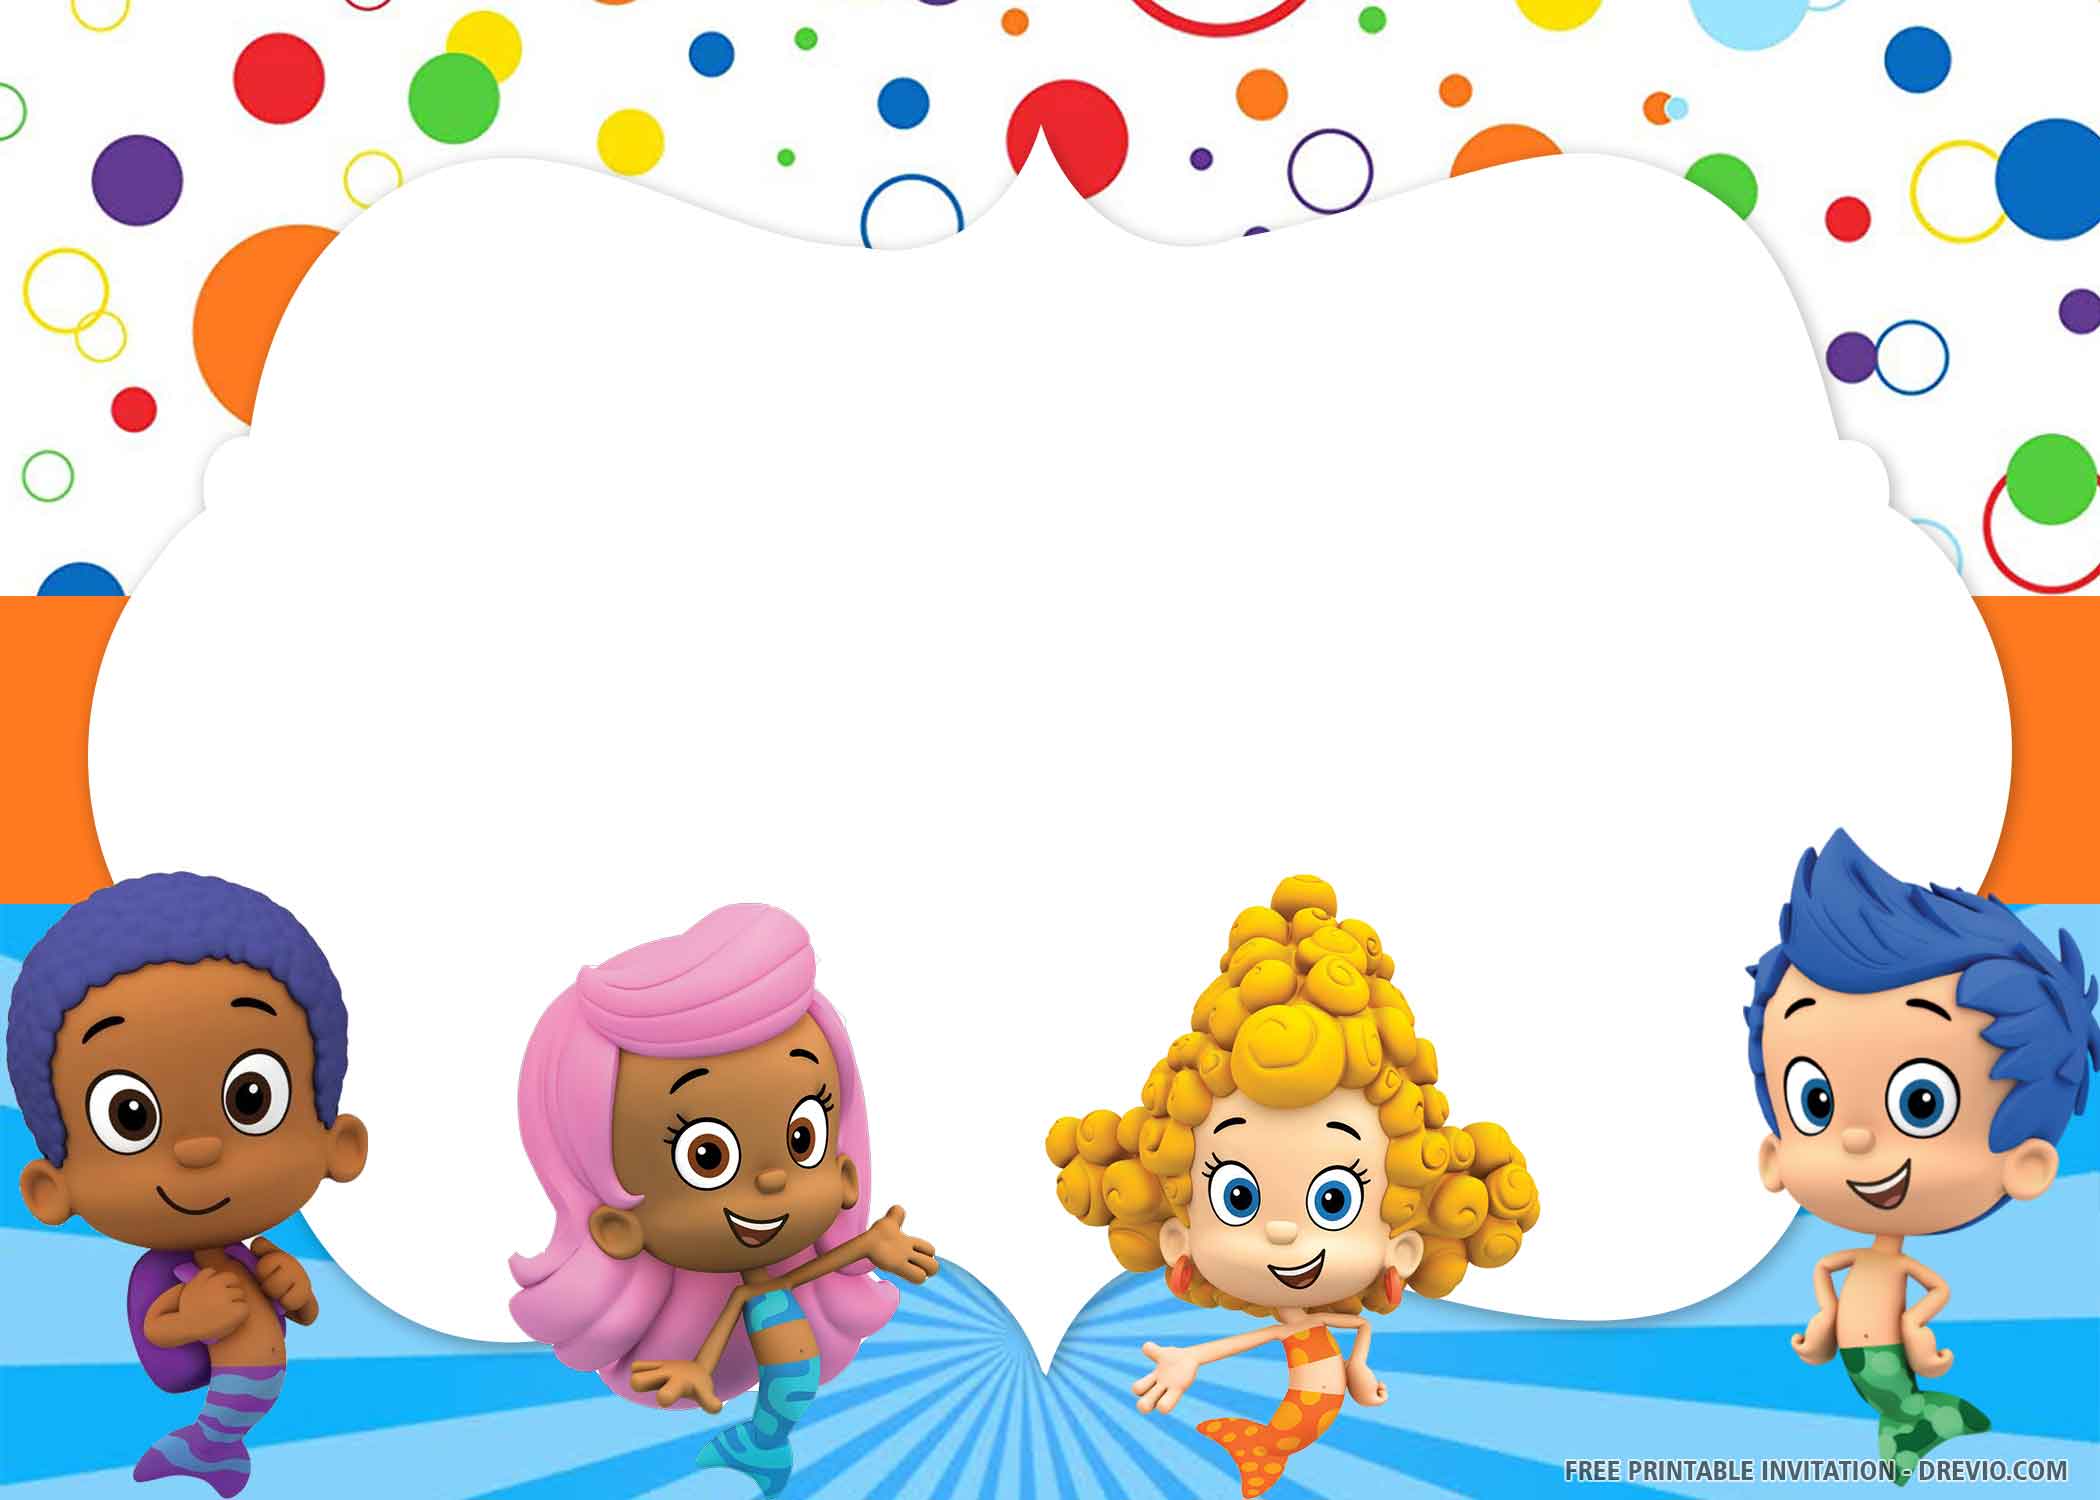 FREE PRINTABLE) – Bubble Guppies Birthday Invitation Templates Throughout Bubble Guppies Birthday Banner Template